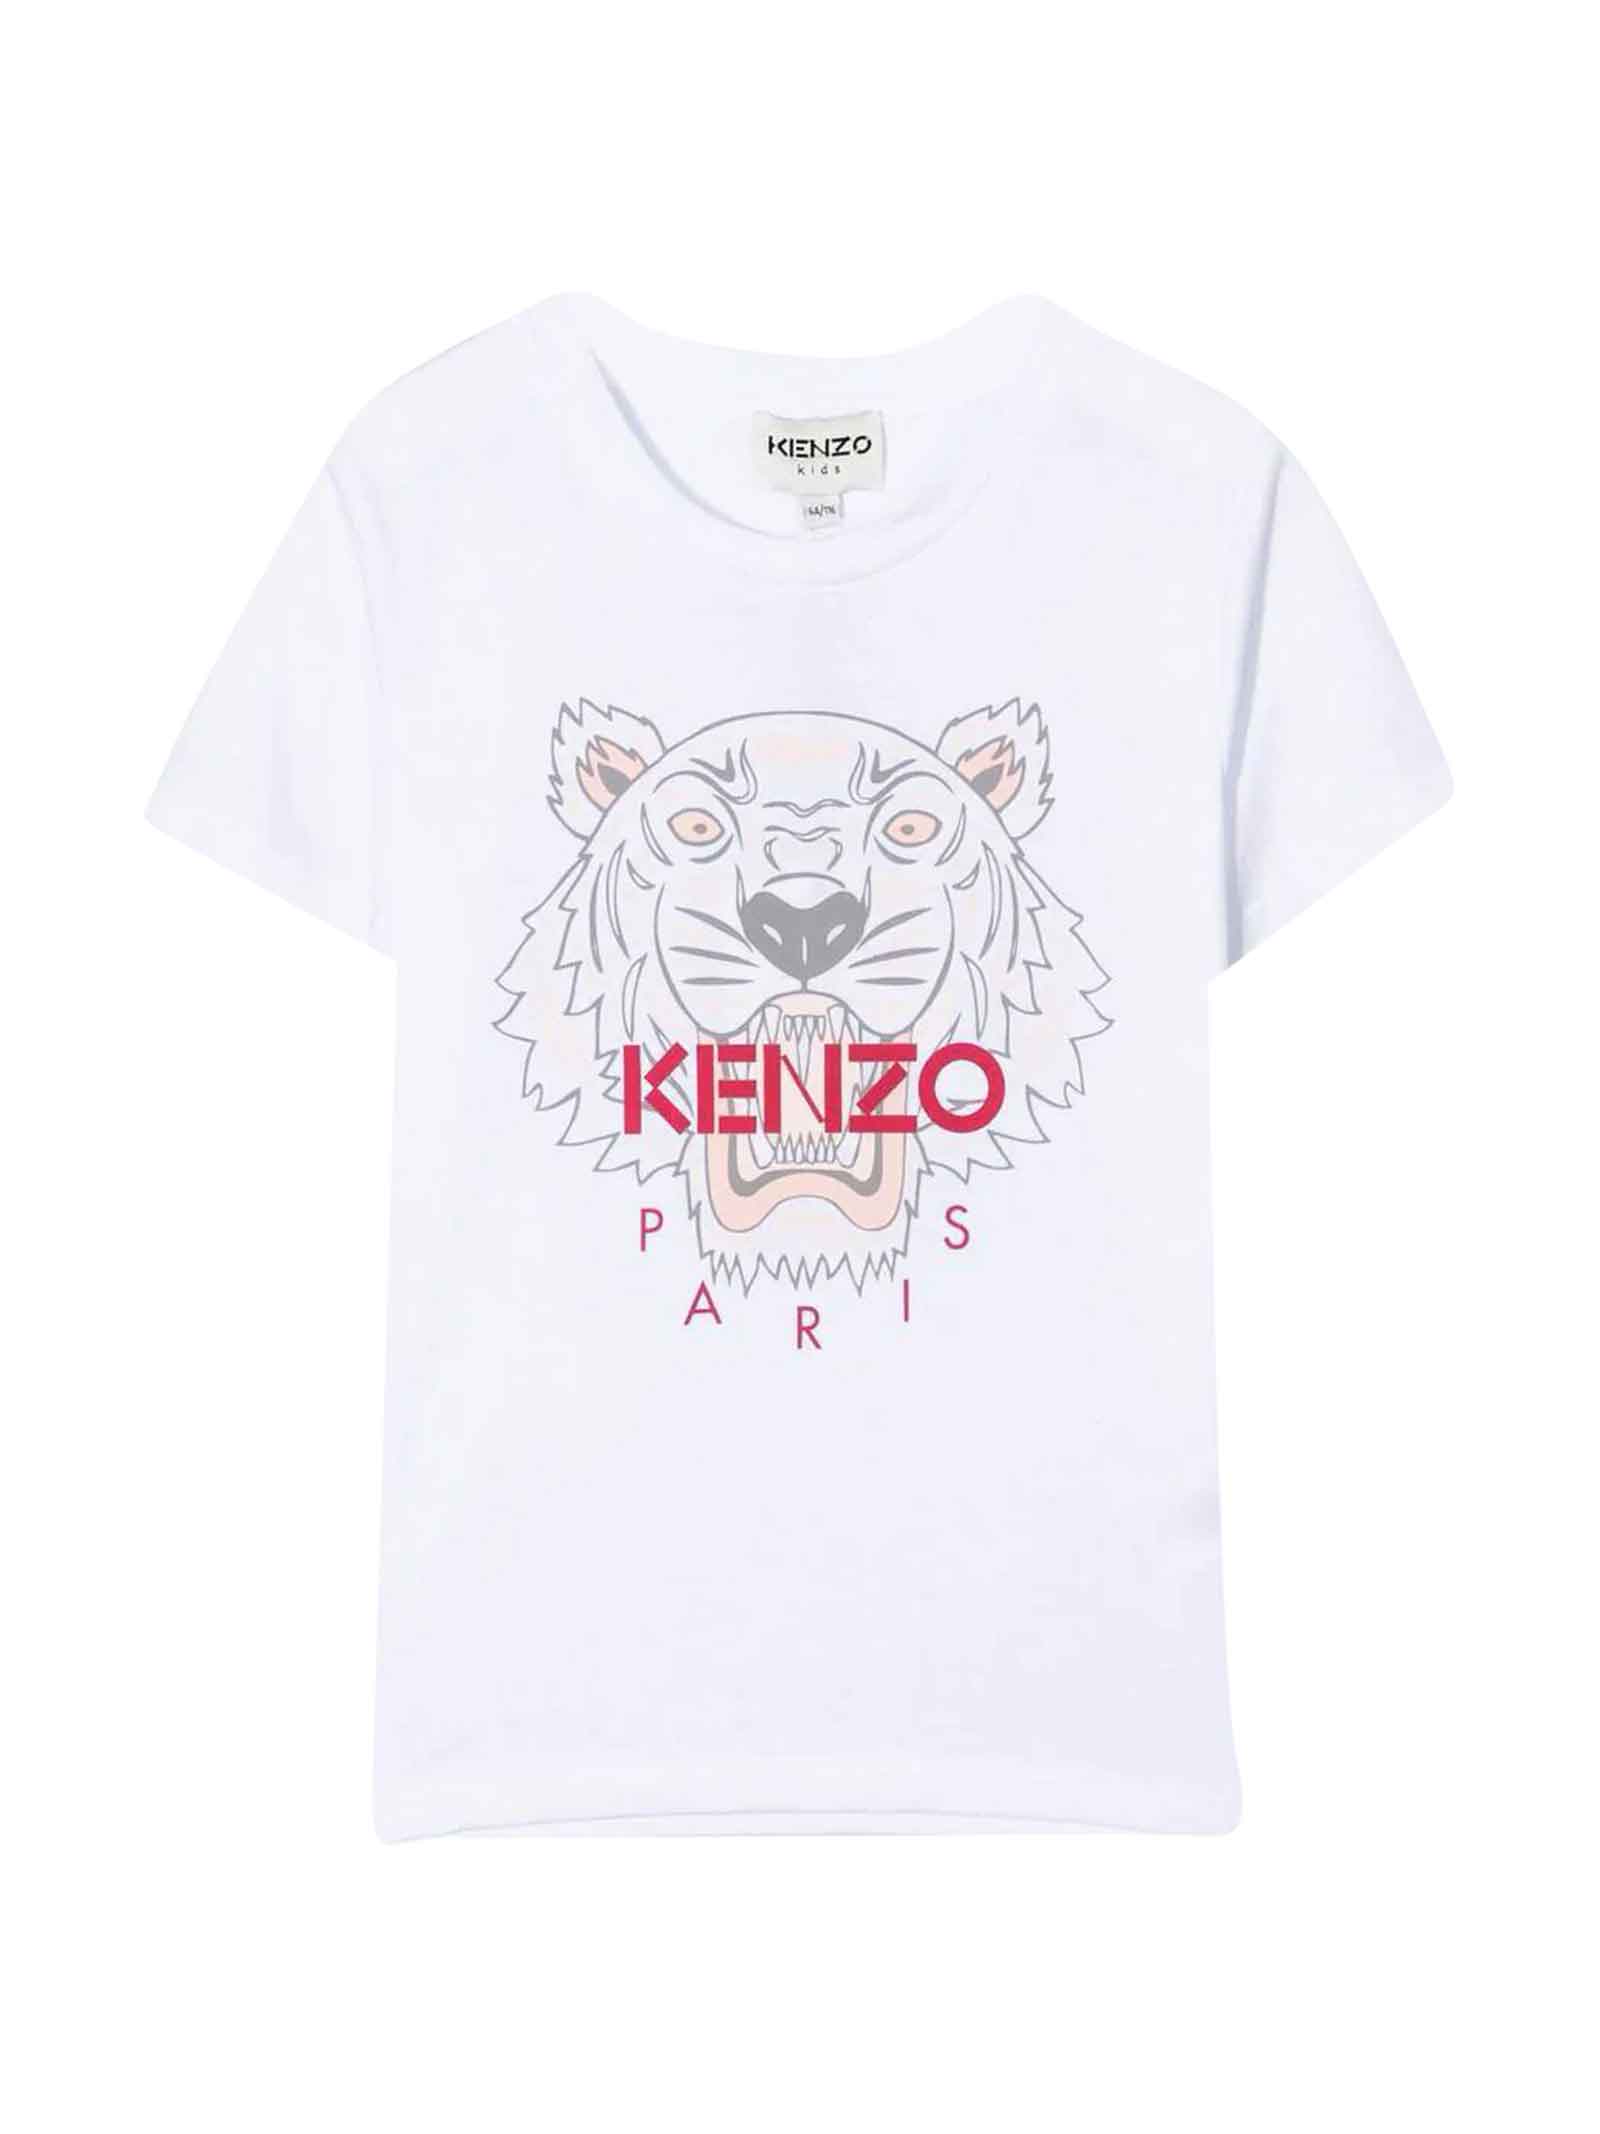 Kenzo White T-shirt Unisex